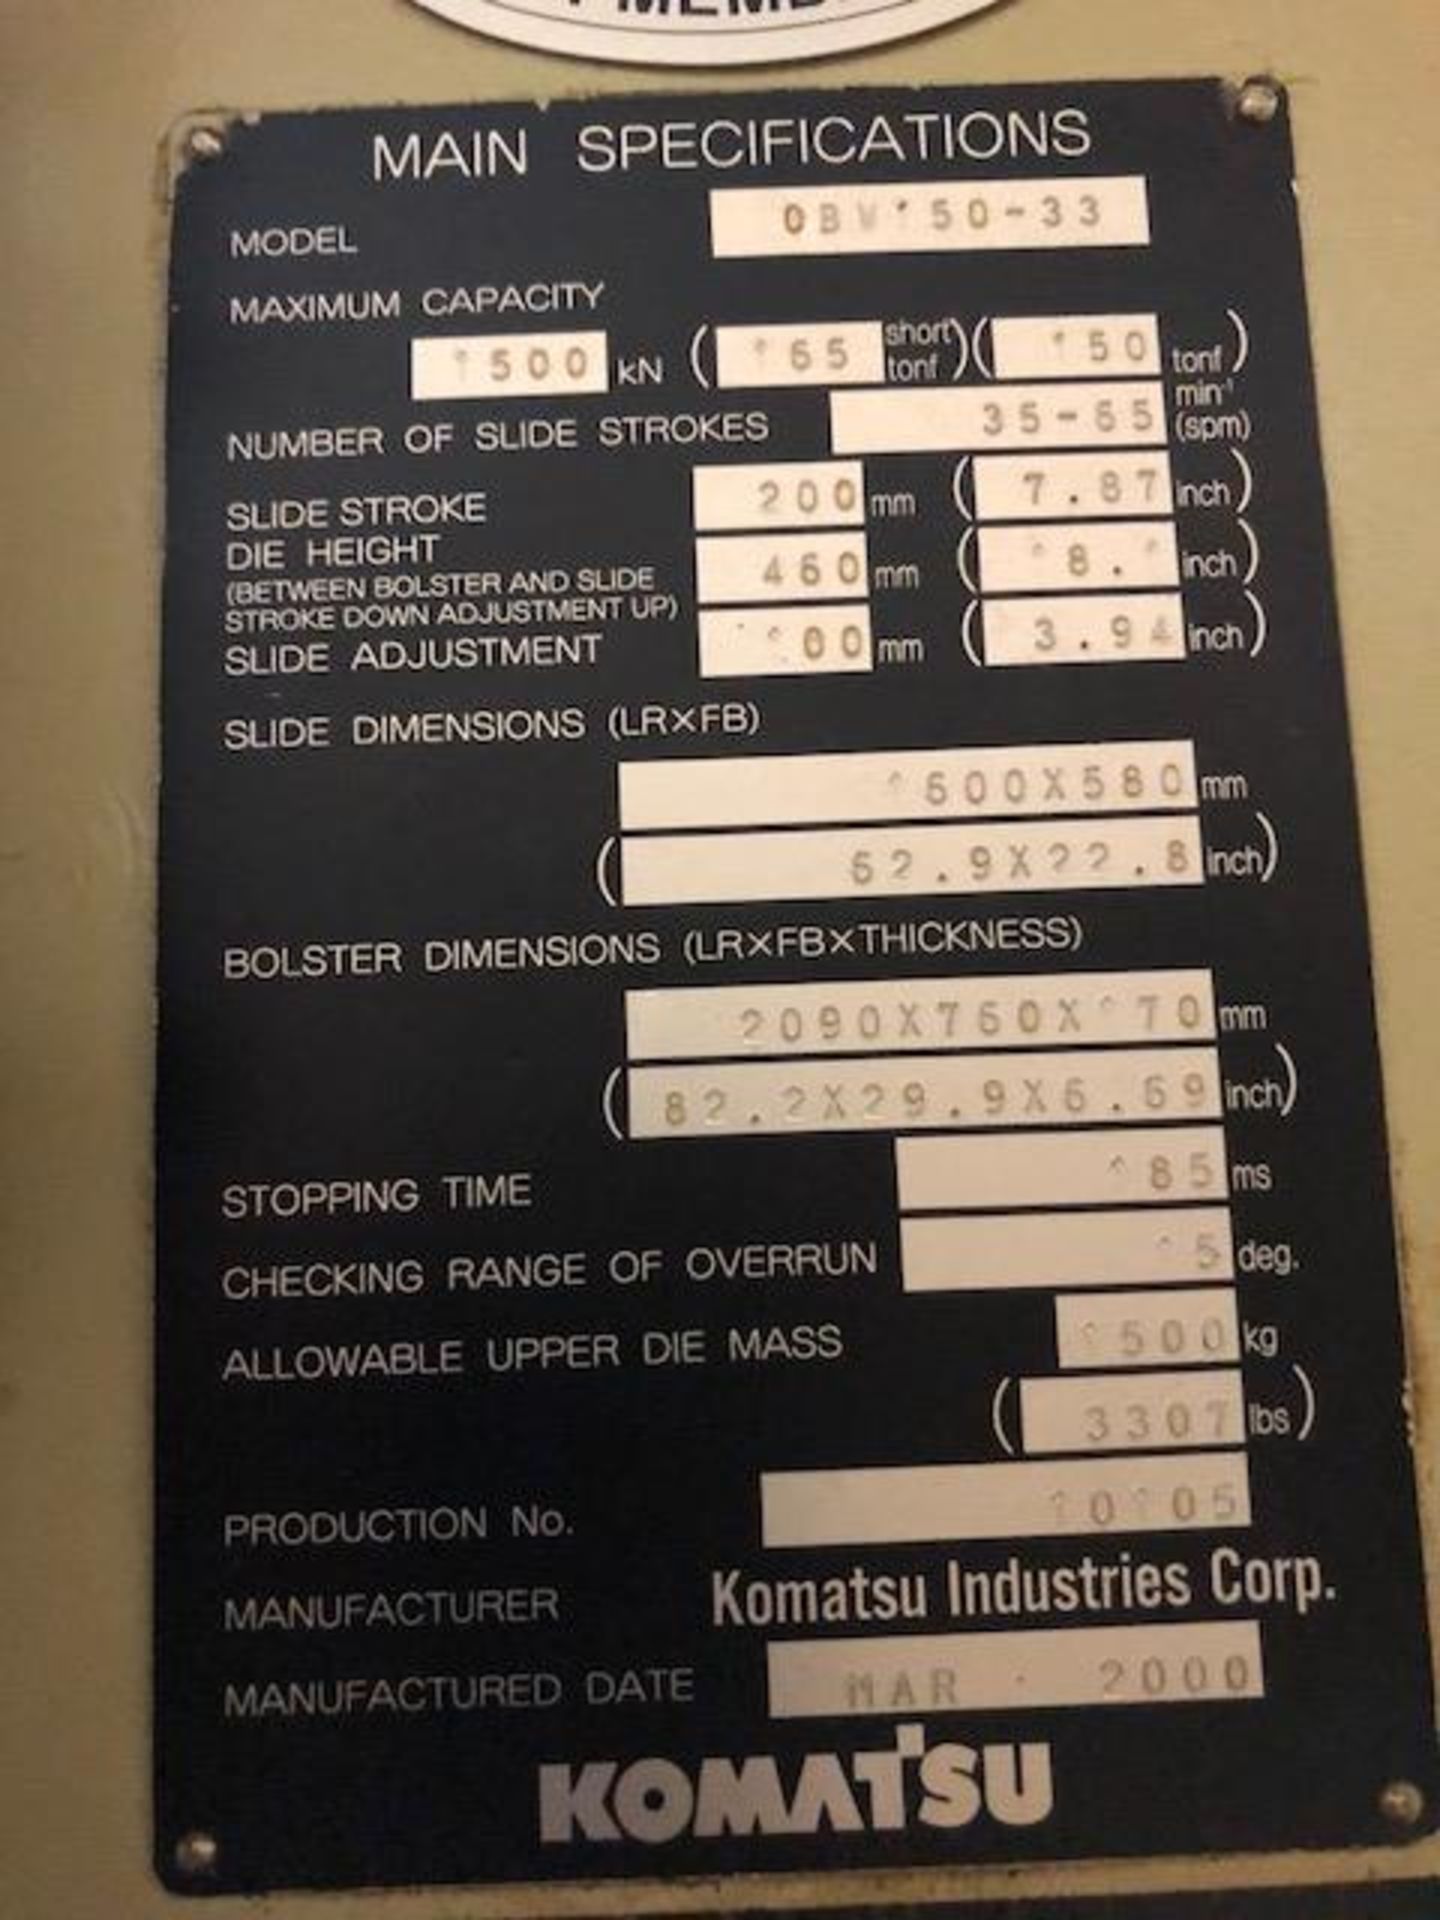 165 TON KOMATSU #OBW-150 DC GAP PRESS S/N 10105 7.87” STROKE, 18.1” DIE HEIGHT, 3.94” ADJ, 35 - 65 - Image 3 of 5